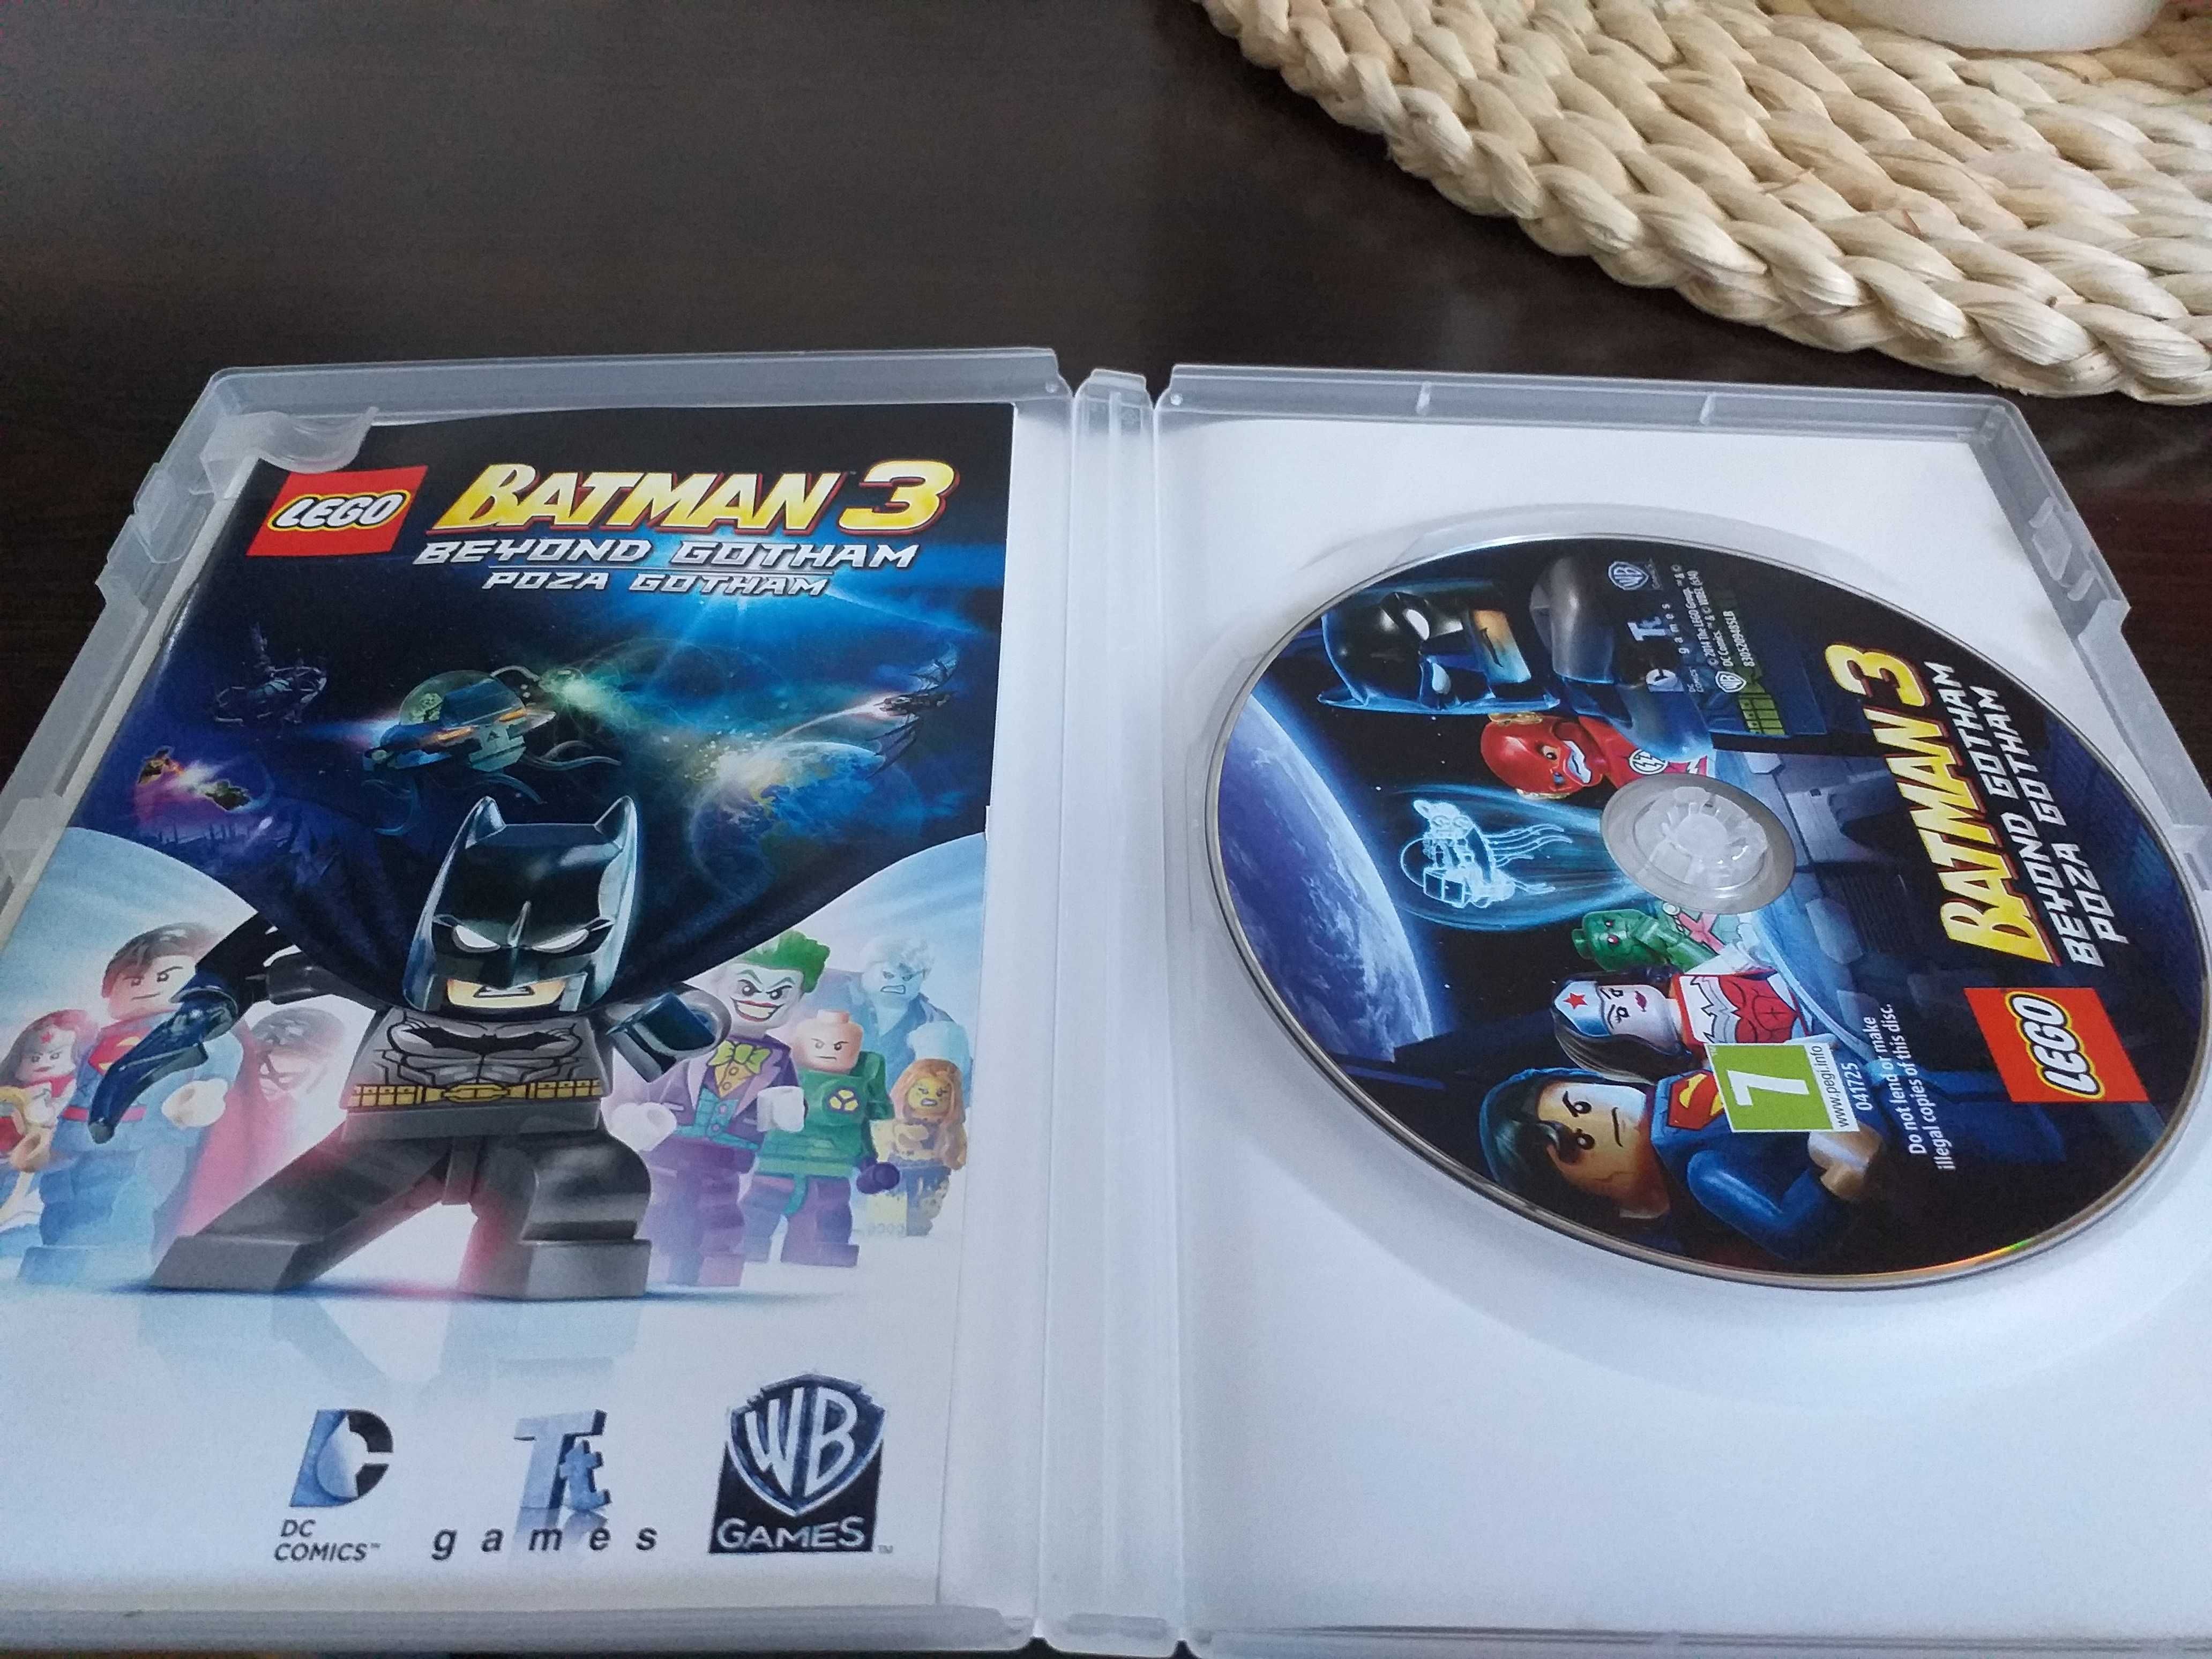 Gra PC DvD Rom Lego Batman, poza Gotham